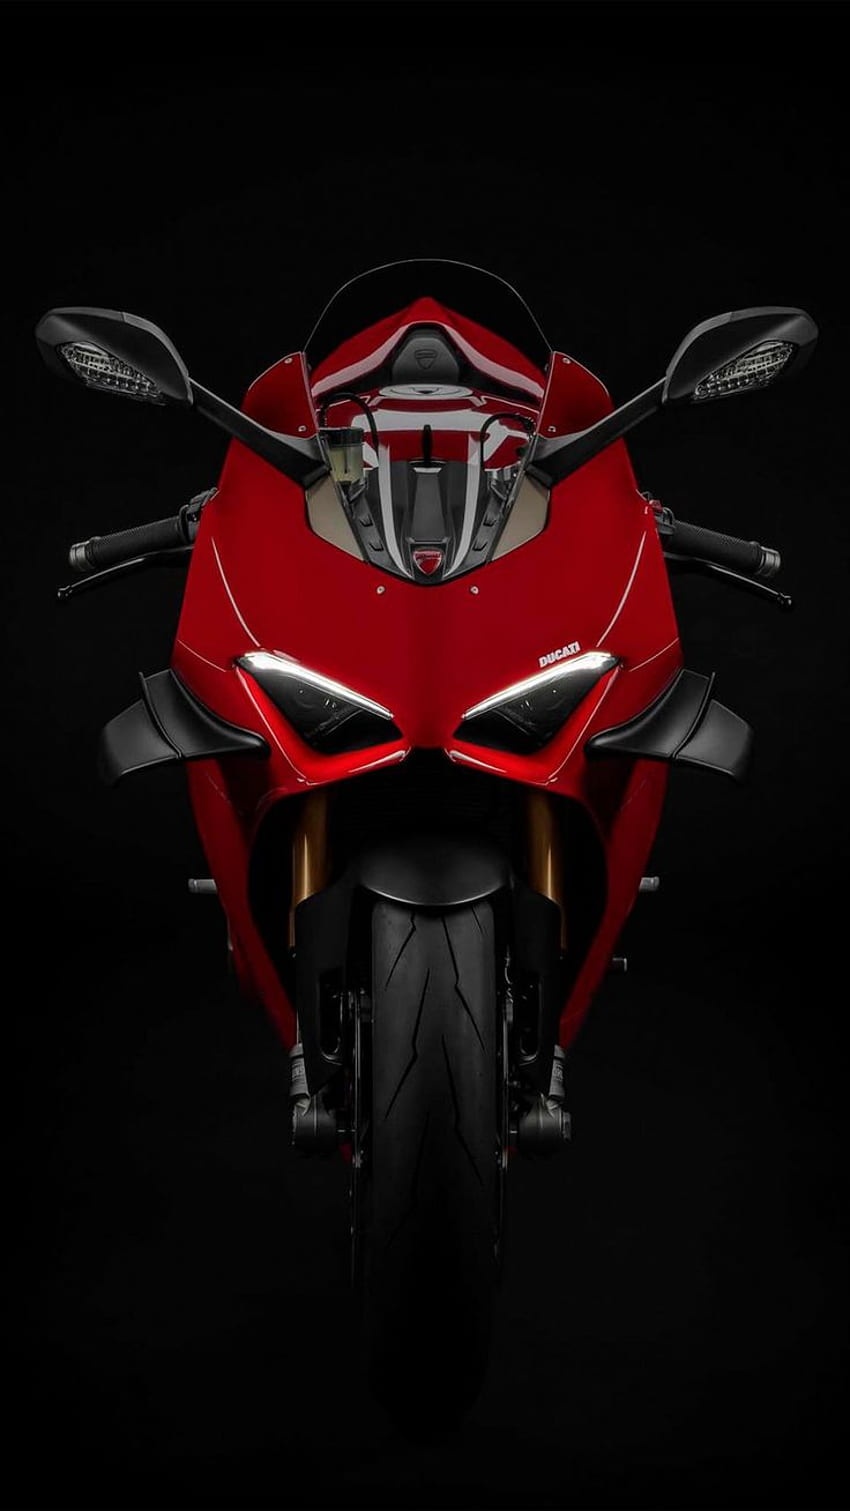 Ducati Panigale V4 2020 Ultra Móvil. Ducati Panigale, Panigale, Ducati, Ducati Panigale fondo de pantalla del teléfono